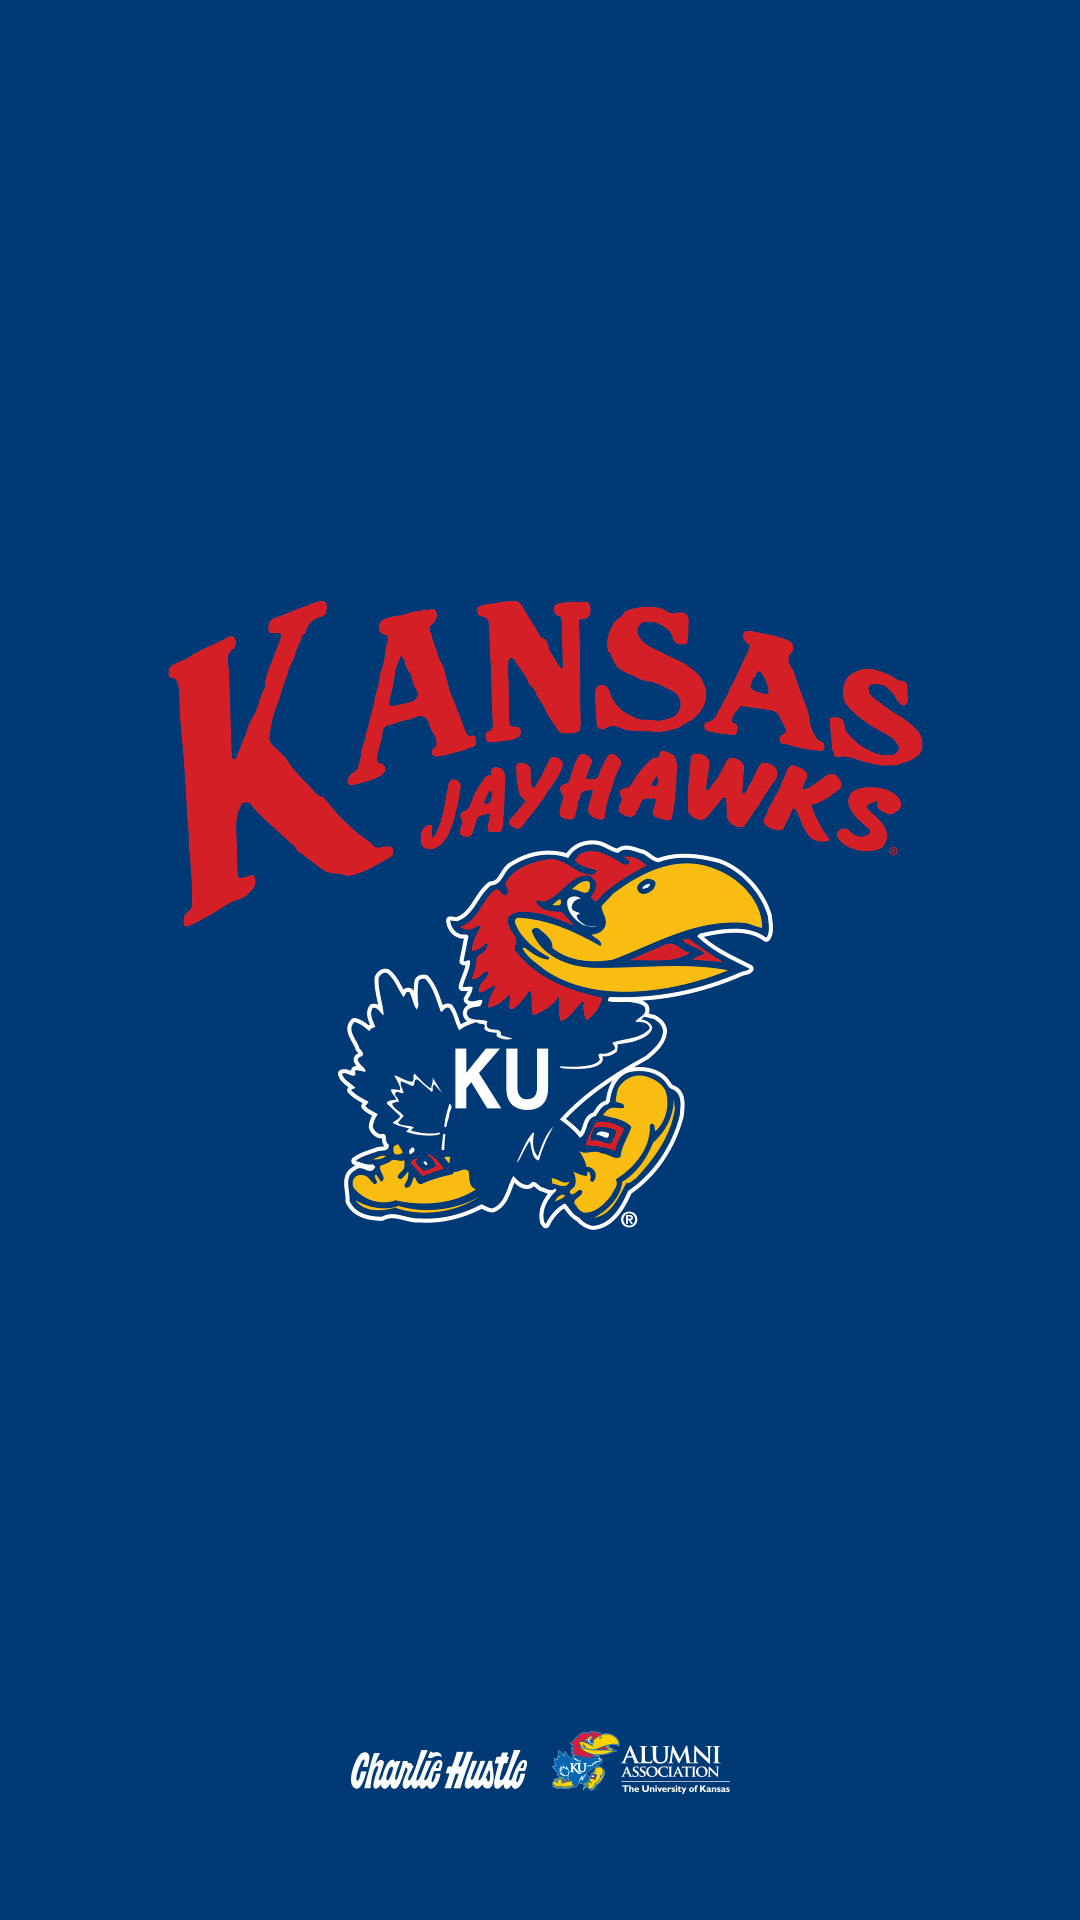 Kansas Jayhawks Basketball Wallpaper 67 images